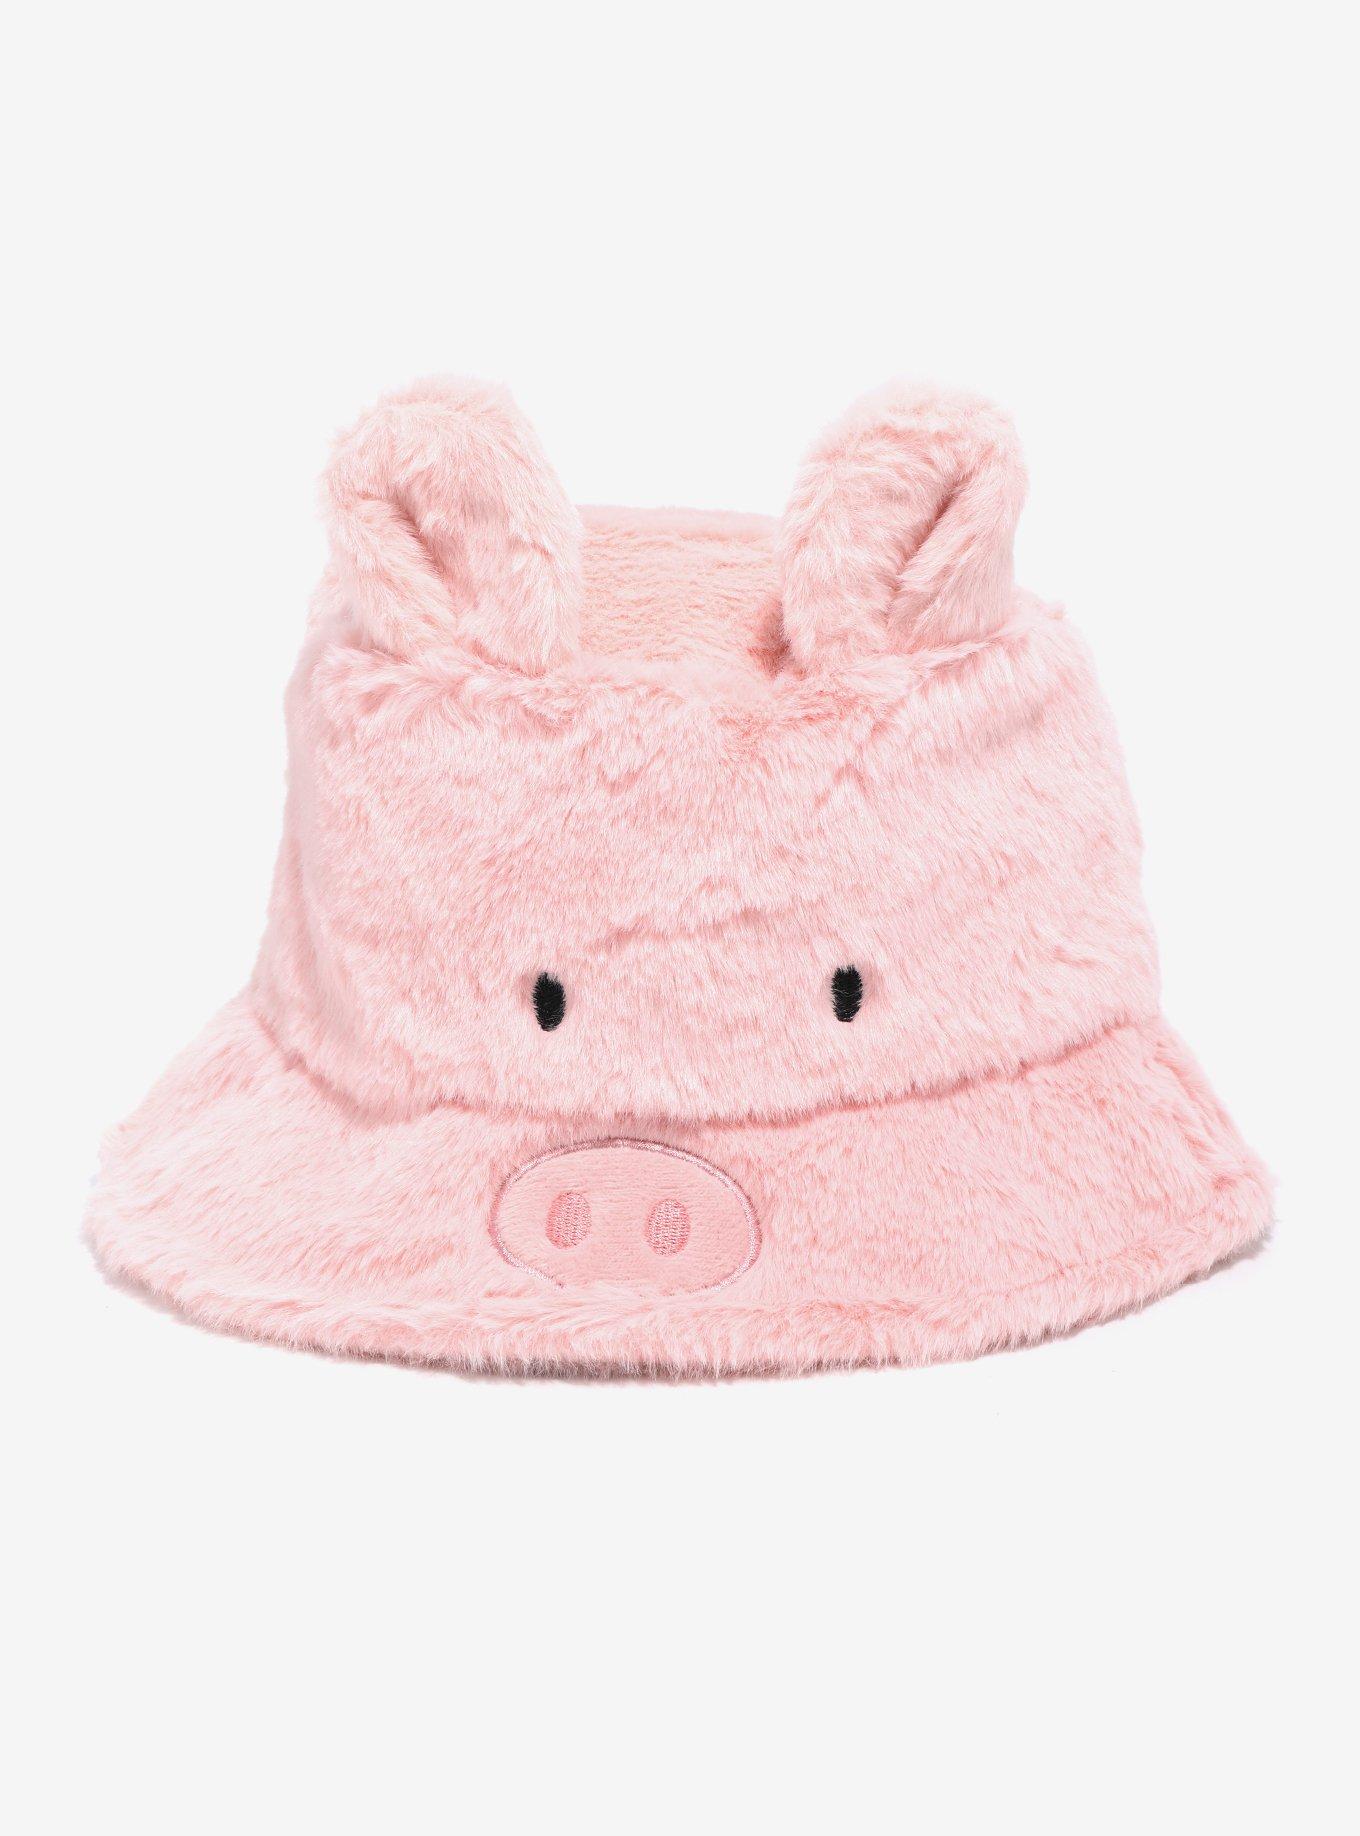 Harajuku Hip Hop Light Pink Bucket Hat Fashionable, Funny, And Sun